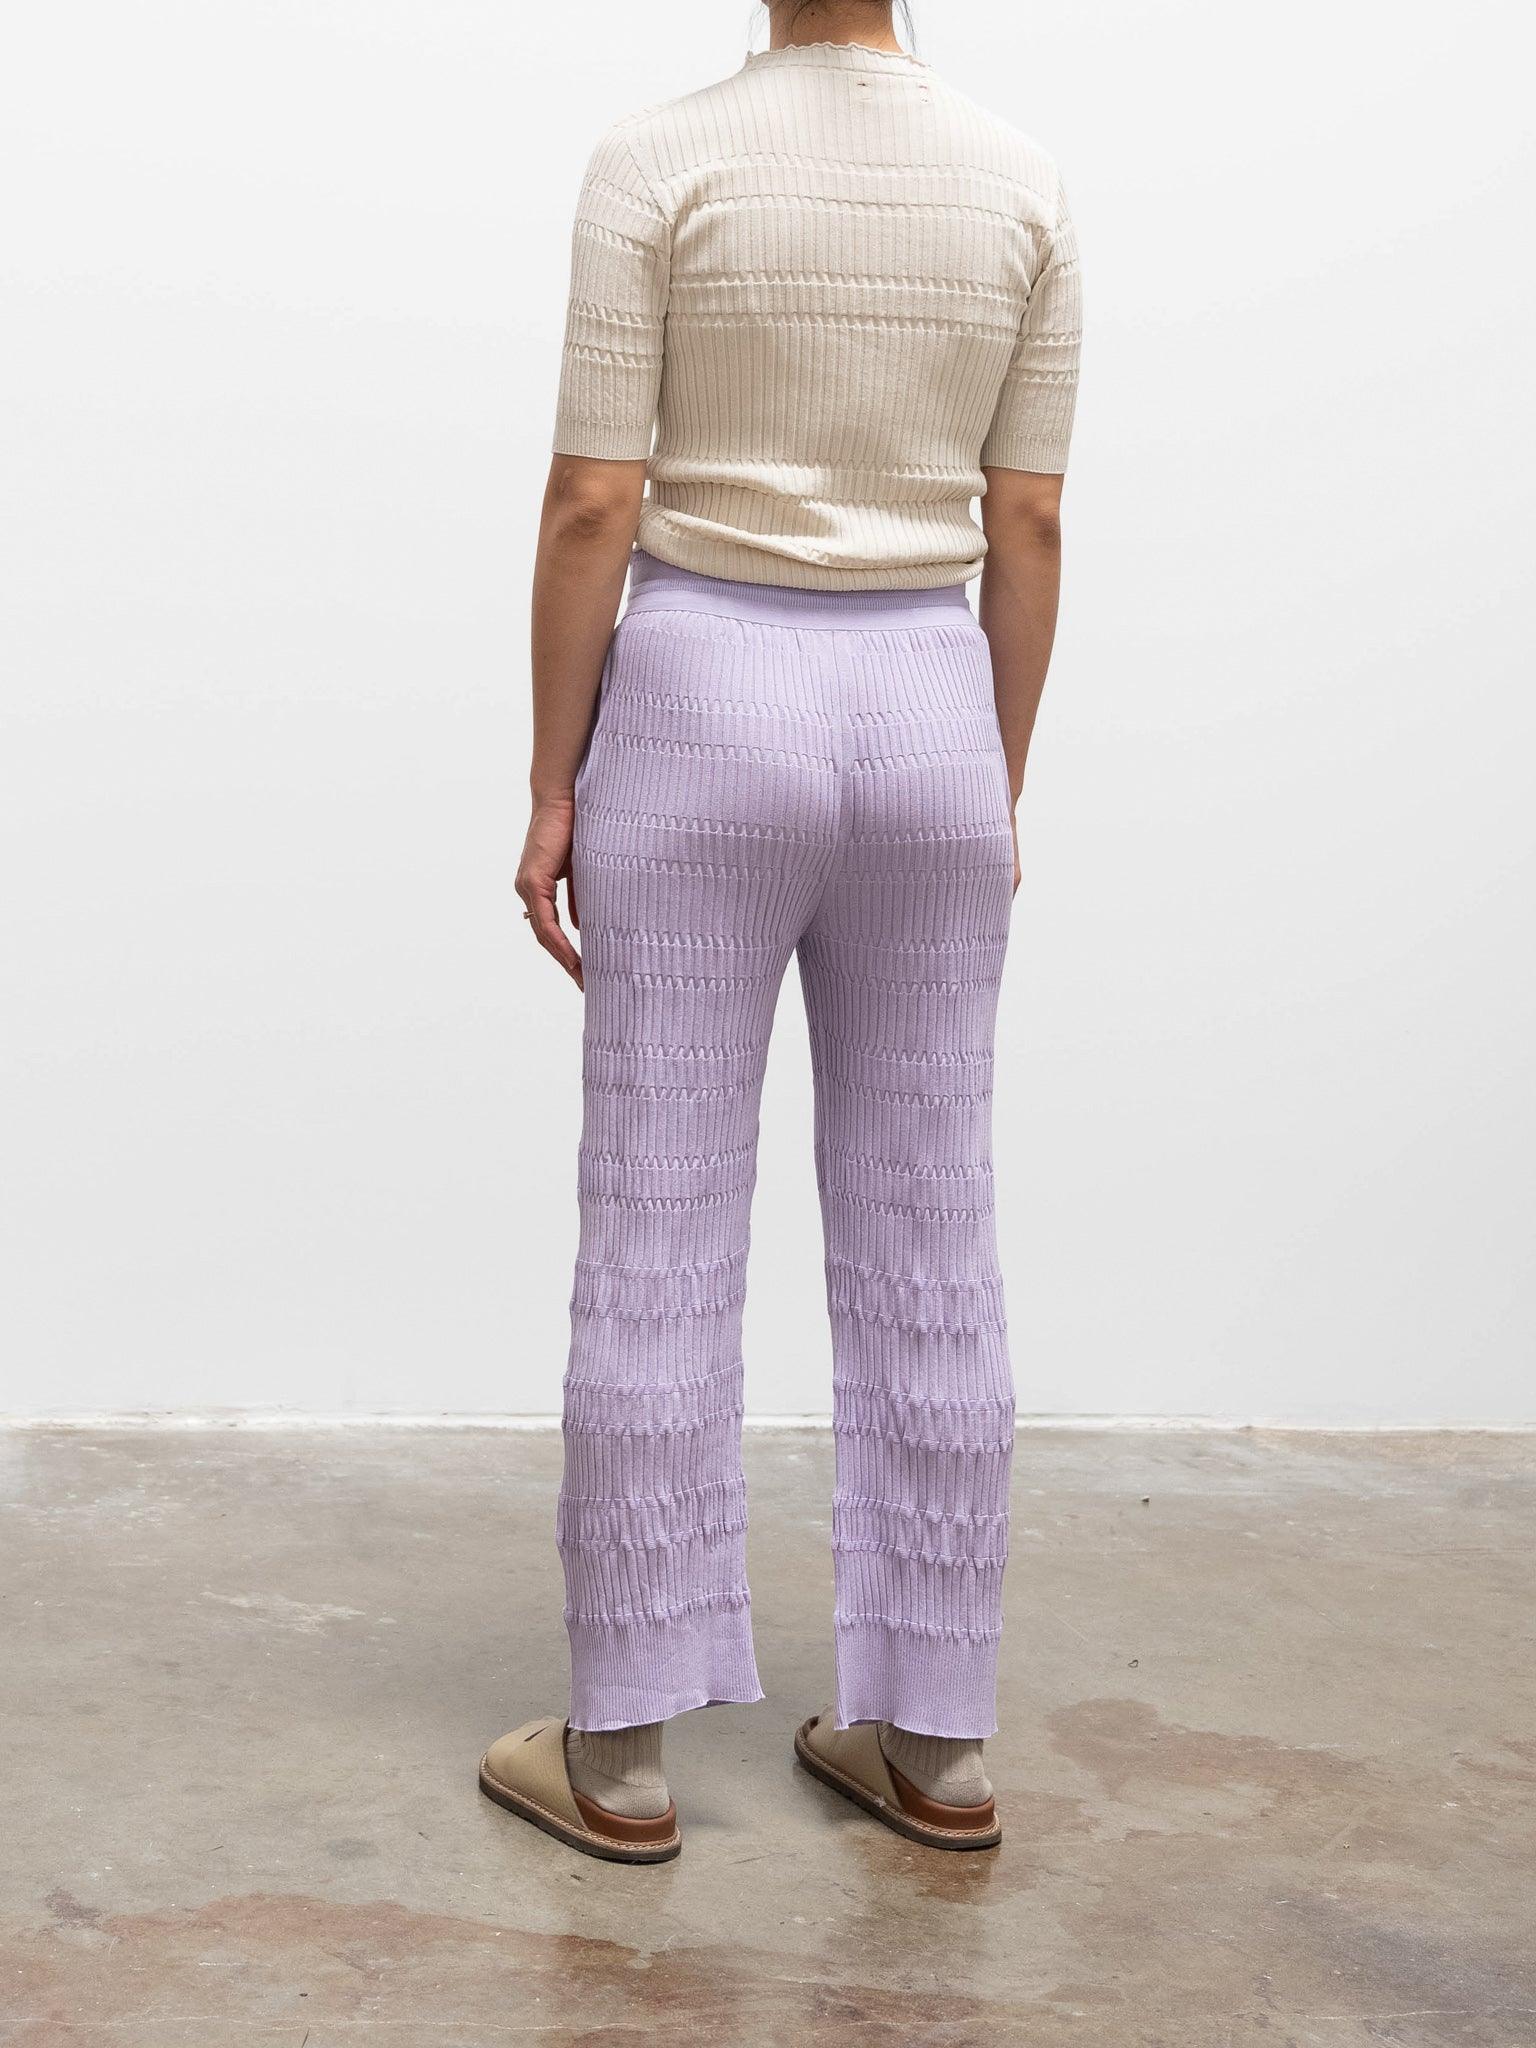 Namu Shop - Unfil High Twist Cotton Ribbed Knit Pants - Taupe Brown